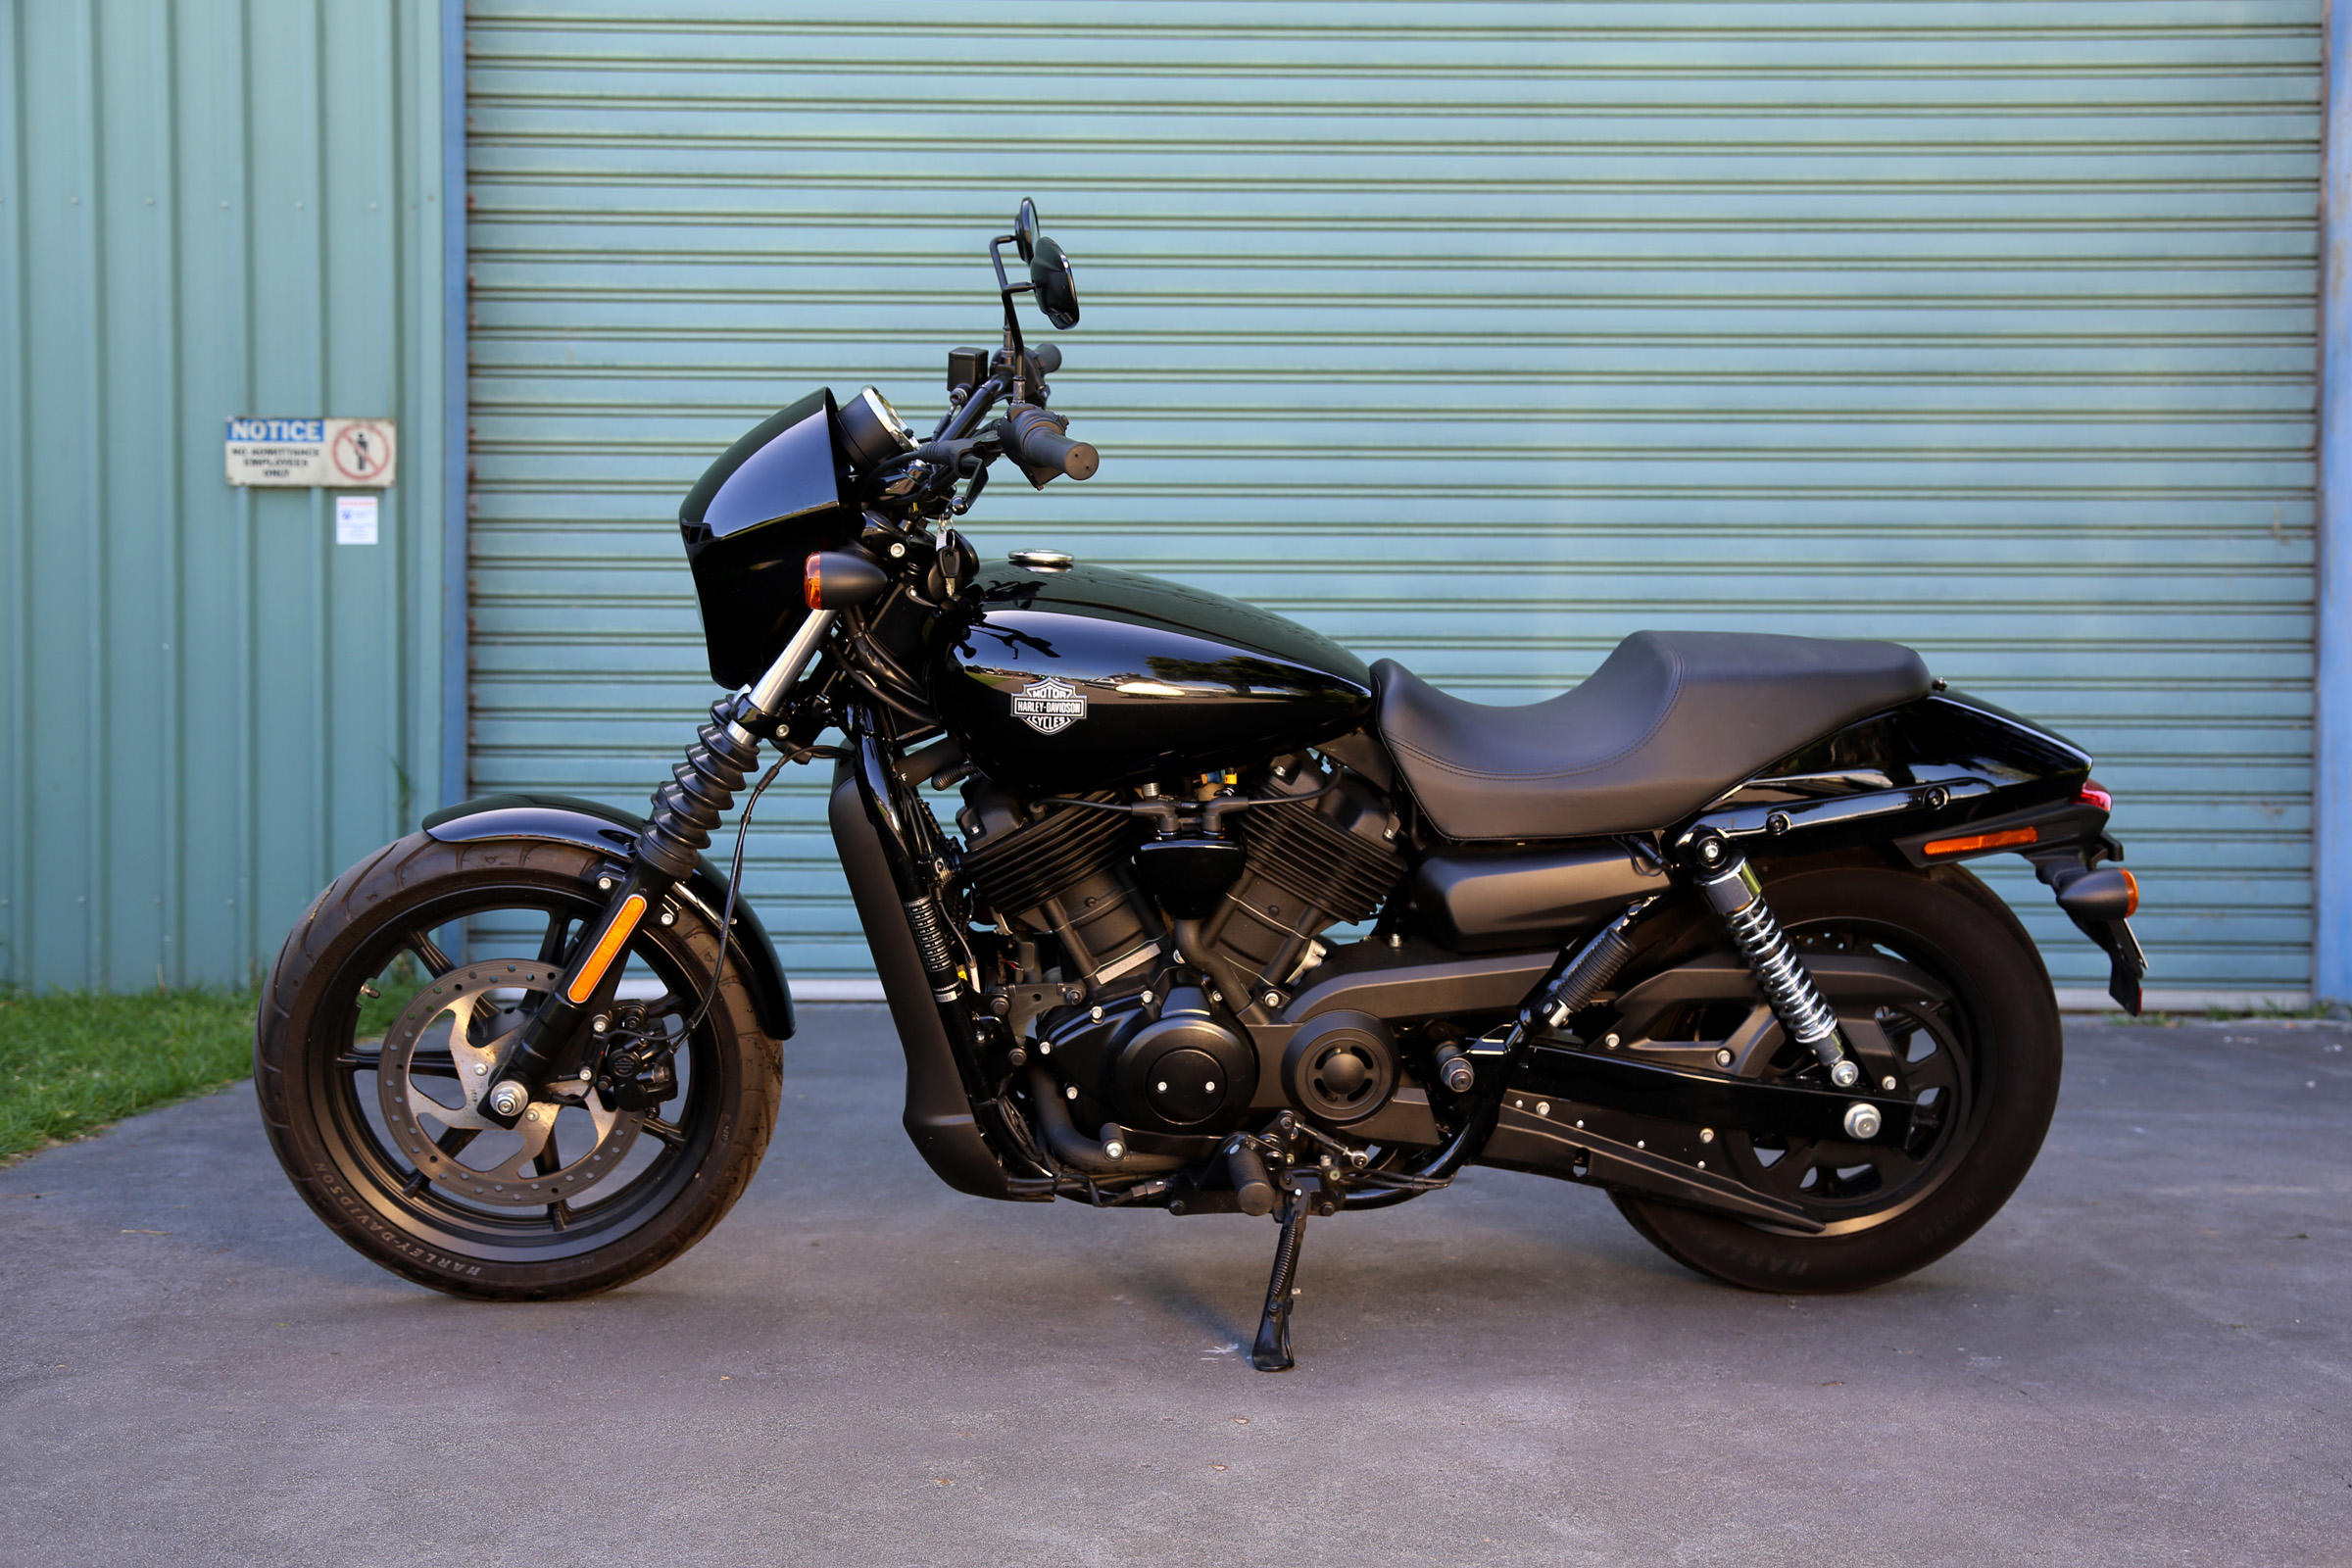 2019 Harley Davidson Street 500 XG500 cls